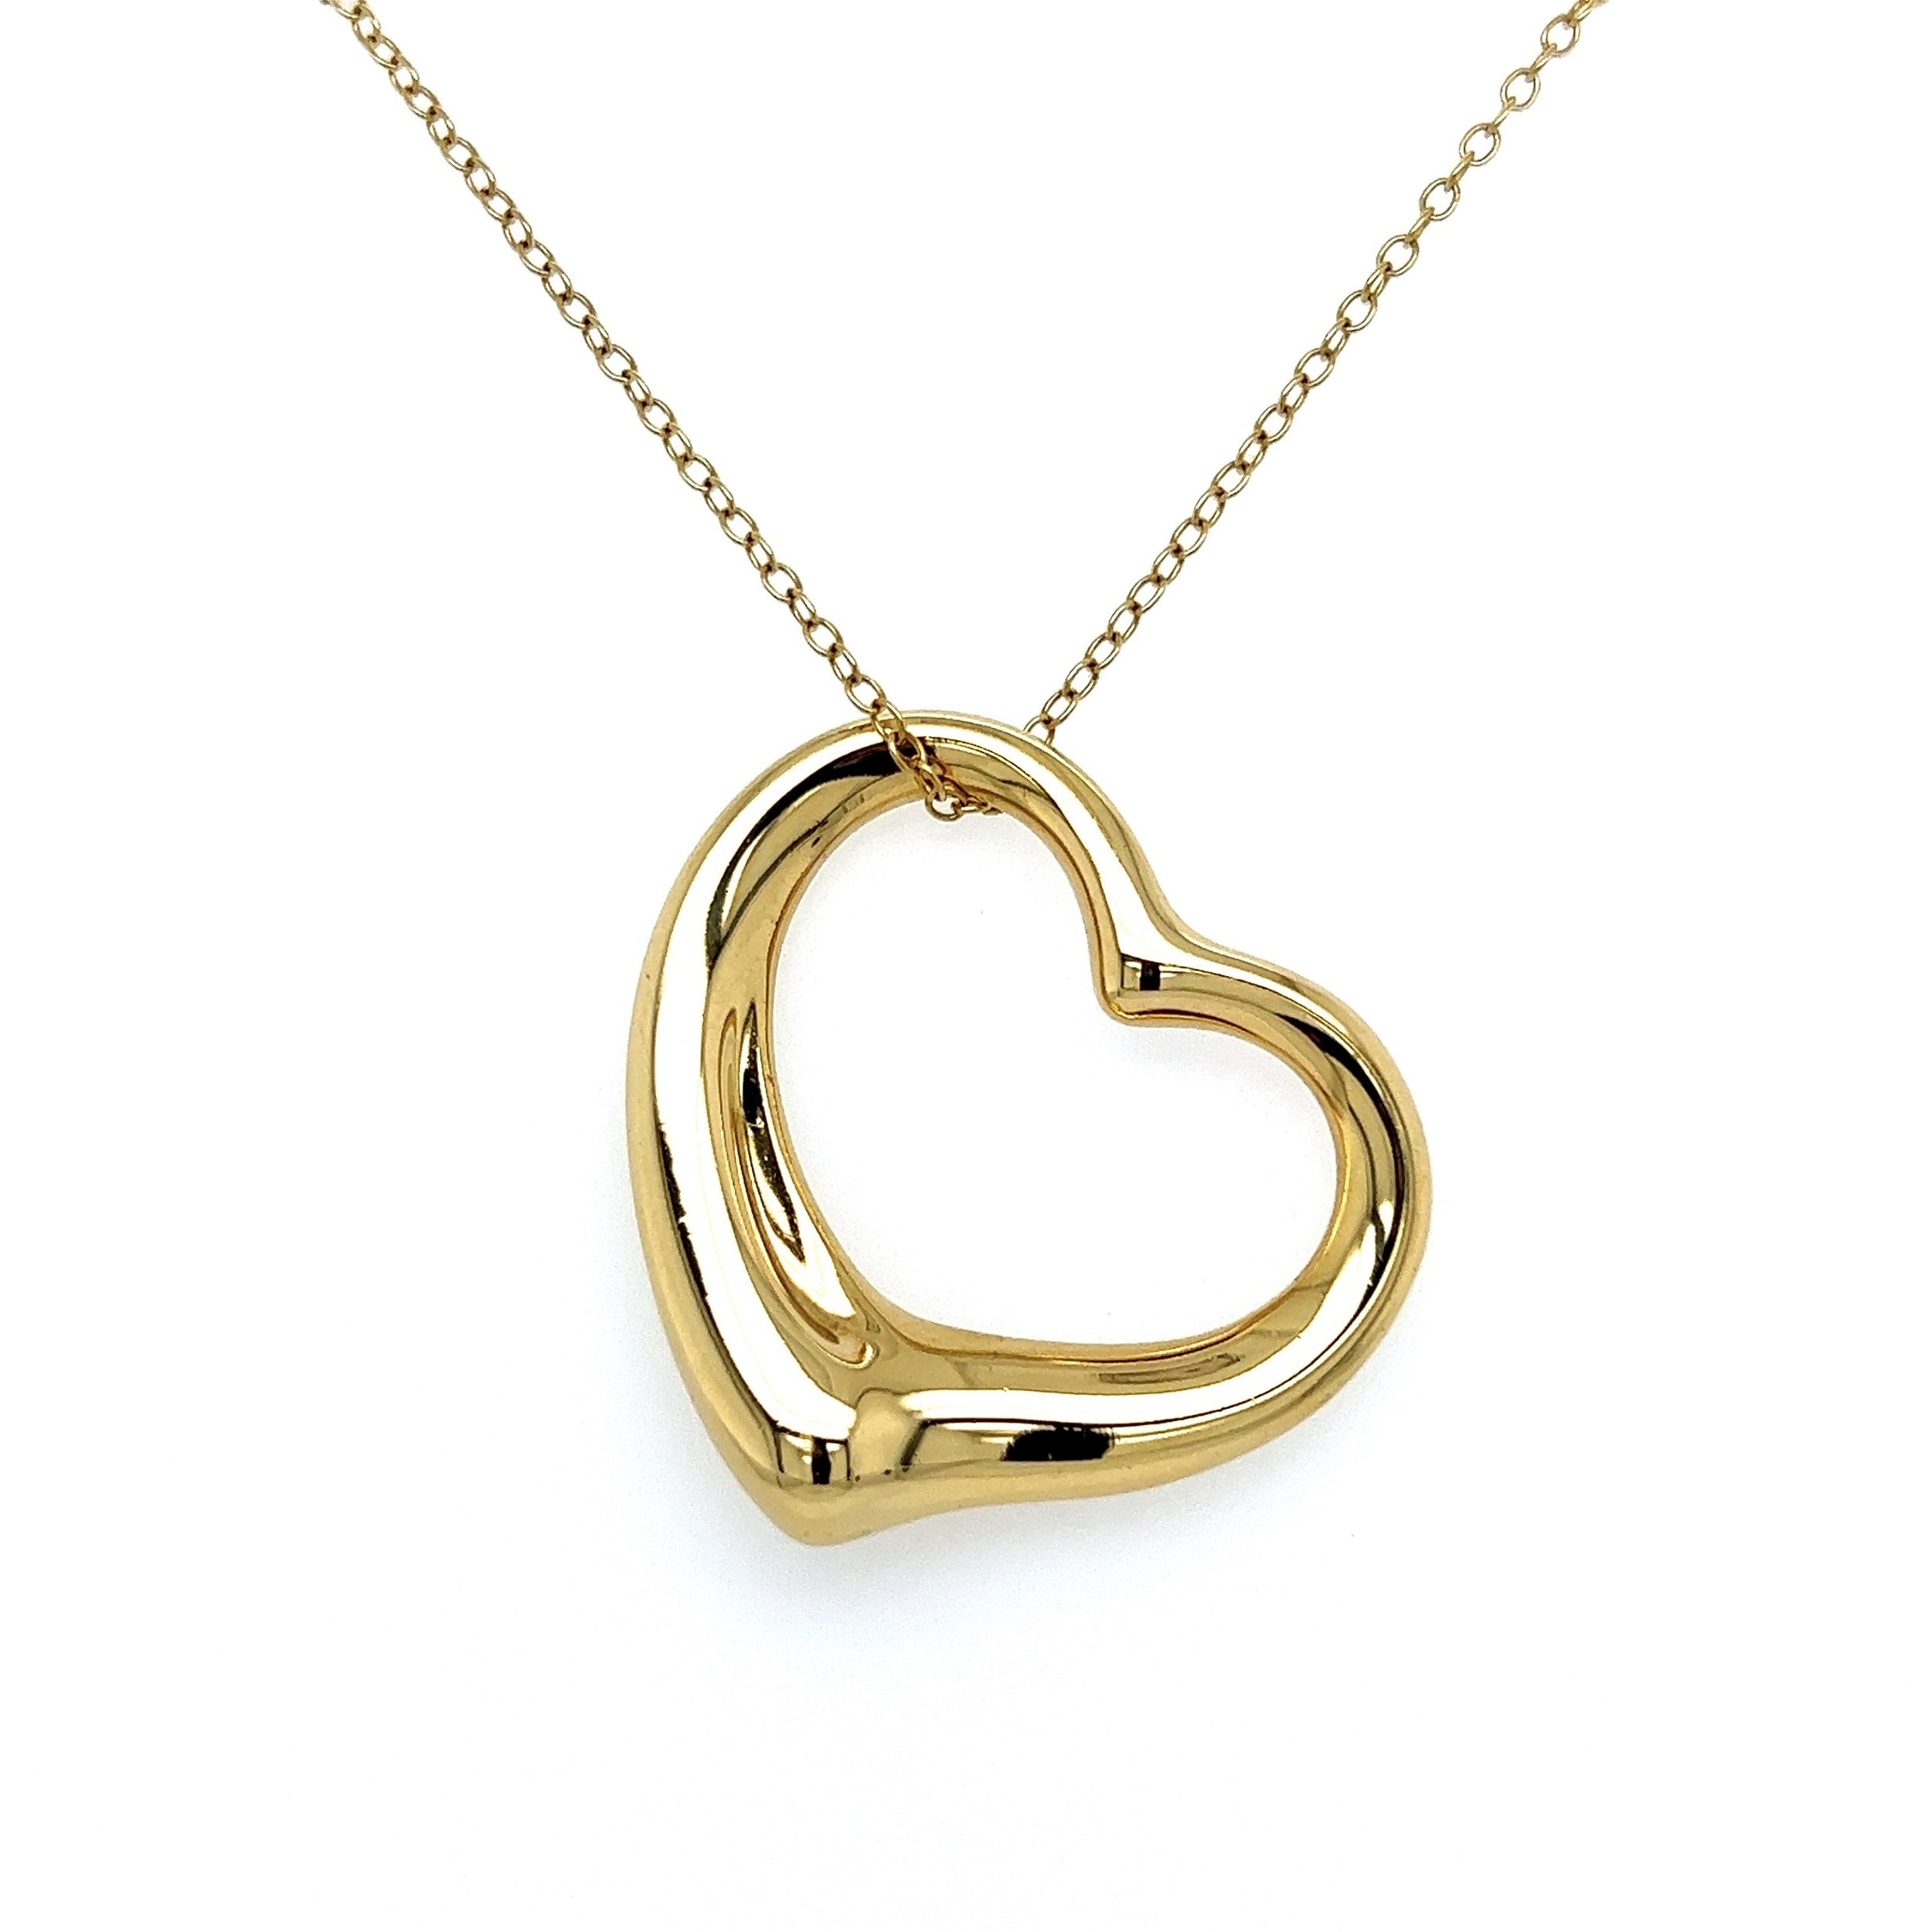 18K YG TIFFANY & CO Elsa Peretti SPAIN Large Open Heart Necklace 14.5g, 32" Chain